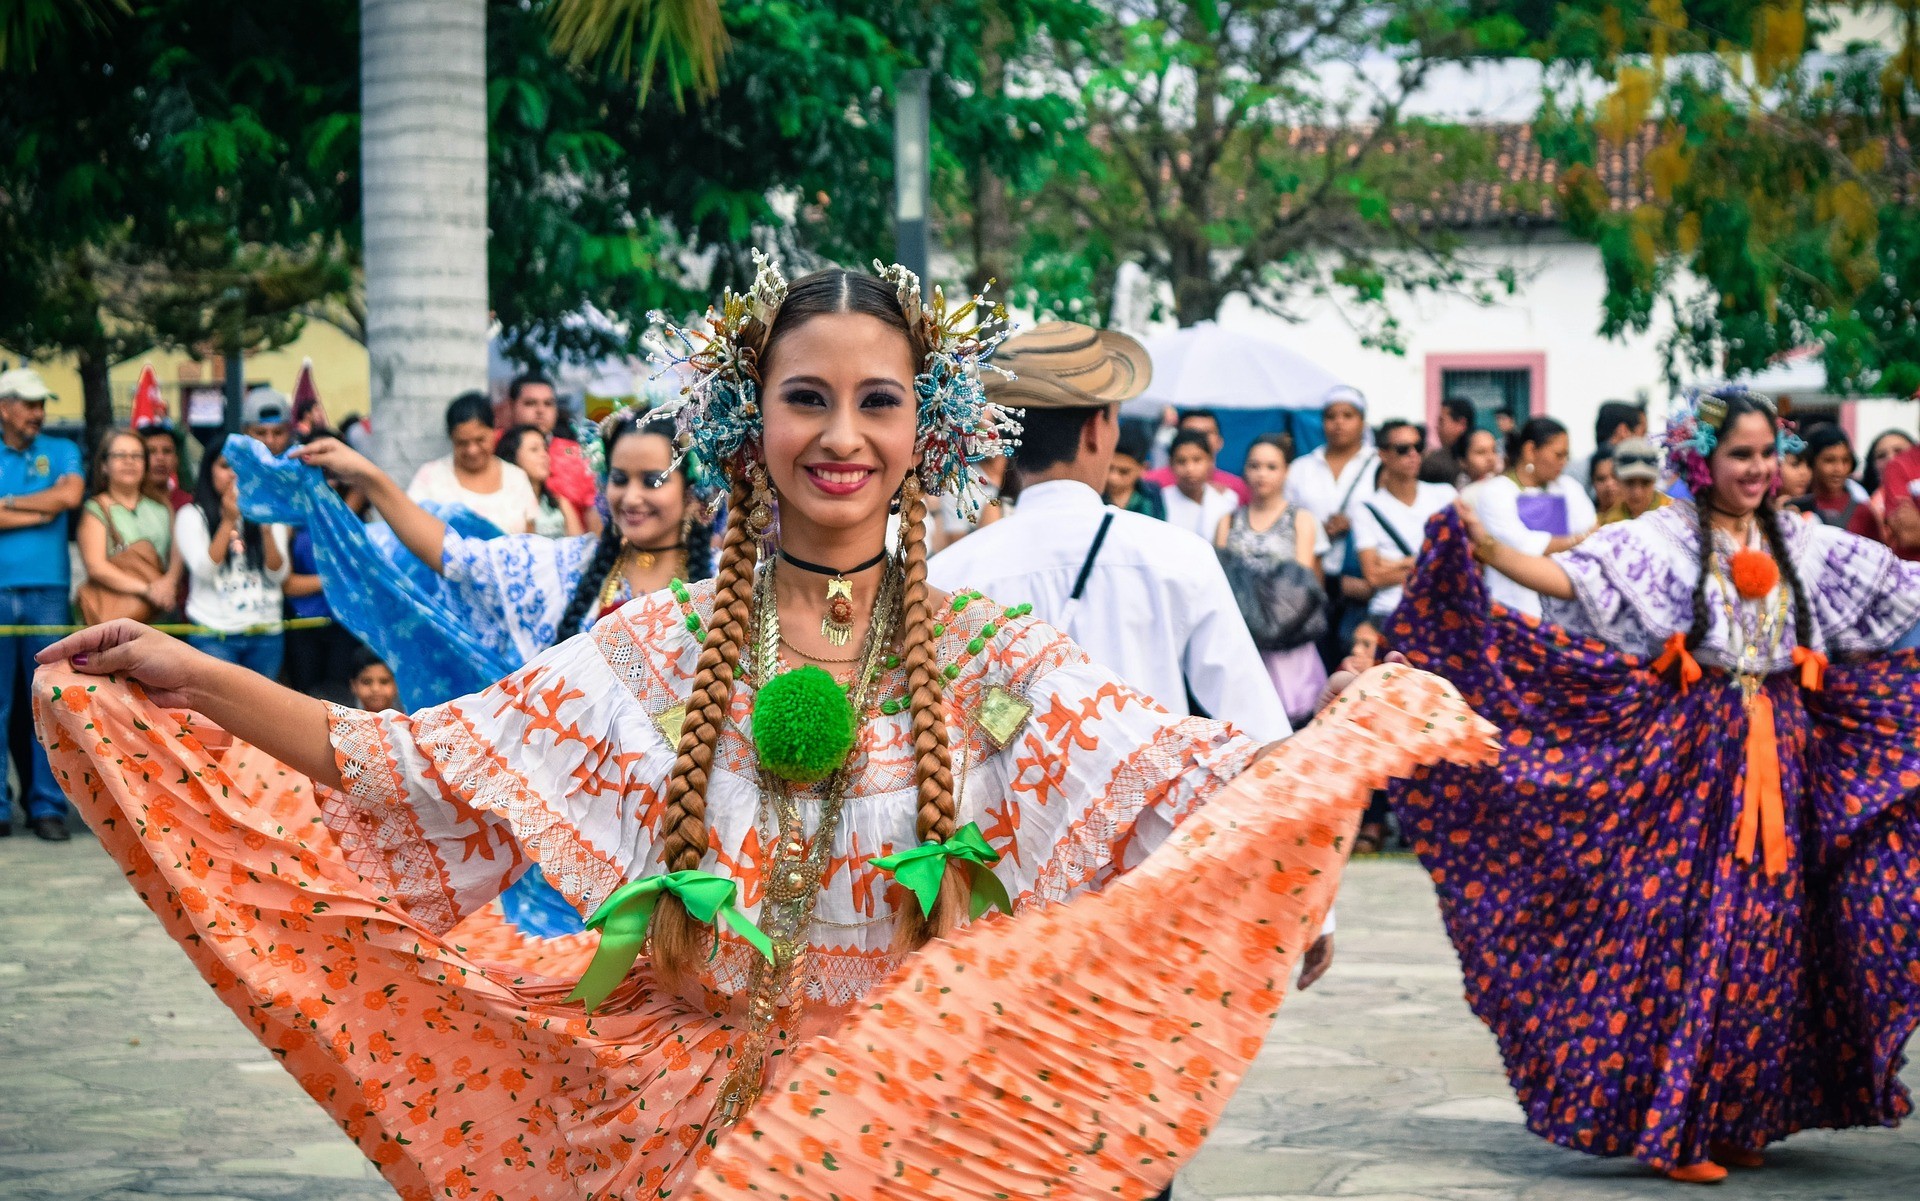 Danze in Costa Rica - Foto di prohispano